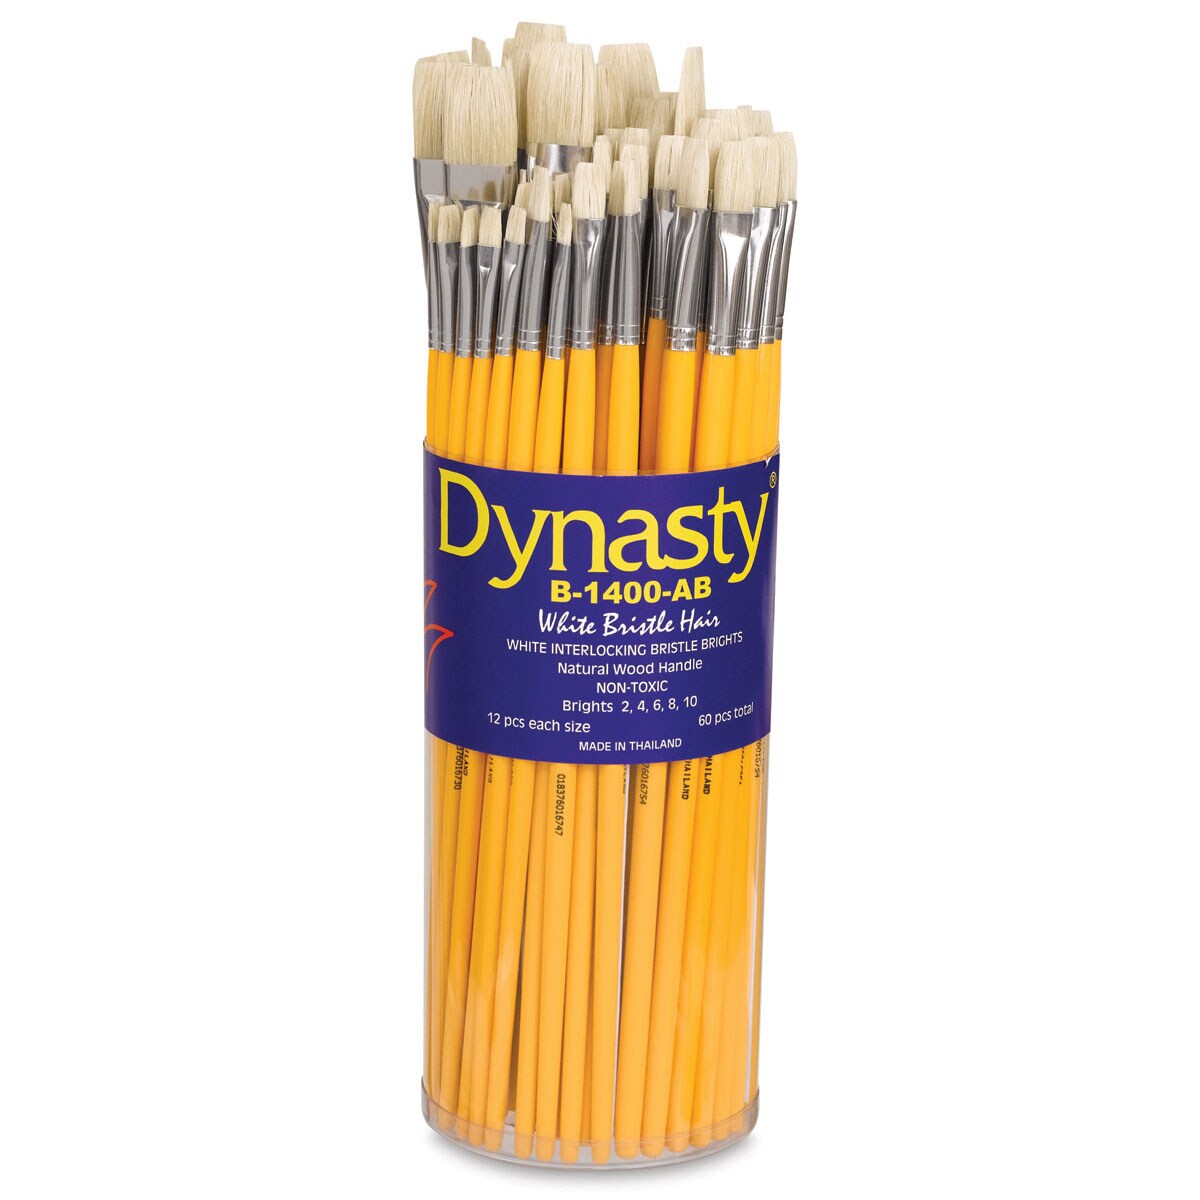 Dynasty Natural White Bristle Brush Set - Bright, Set of 60